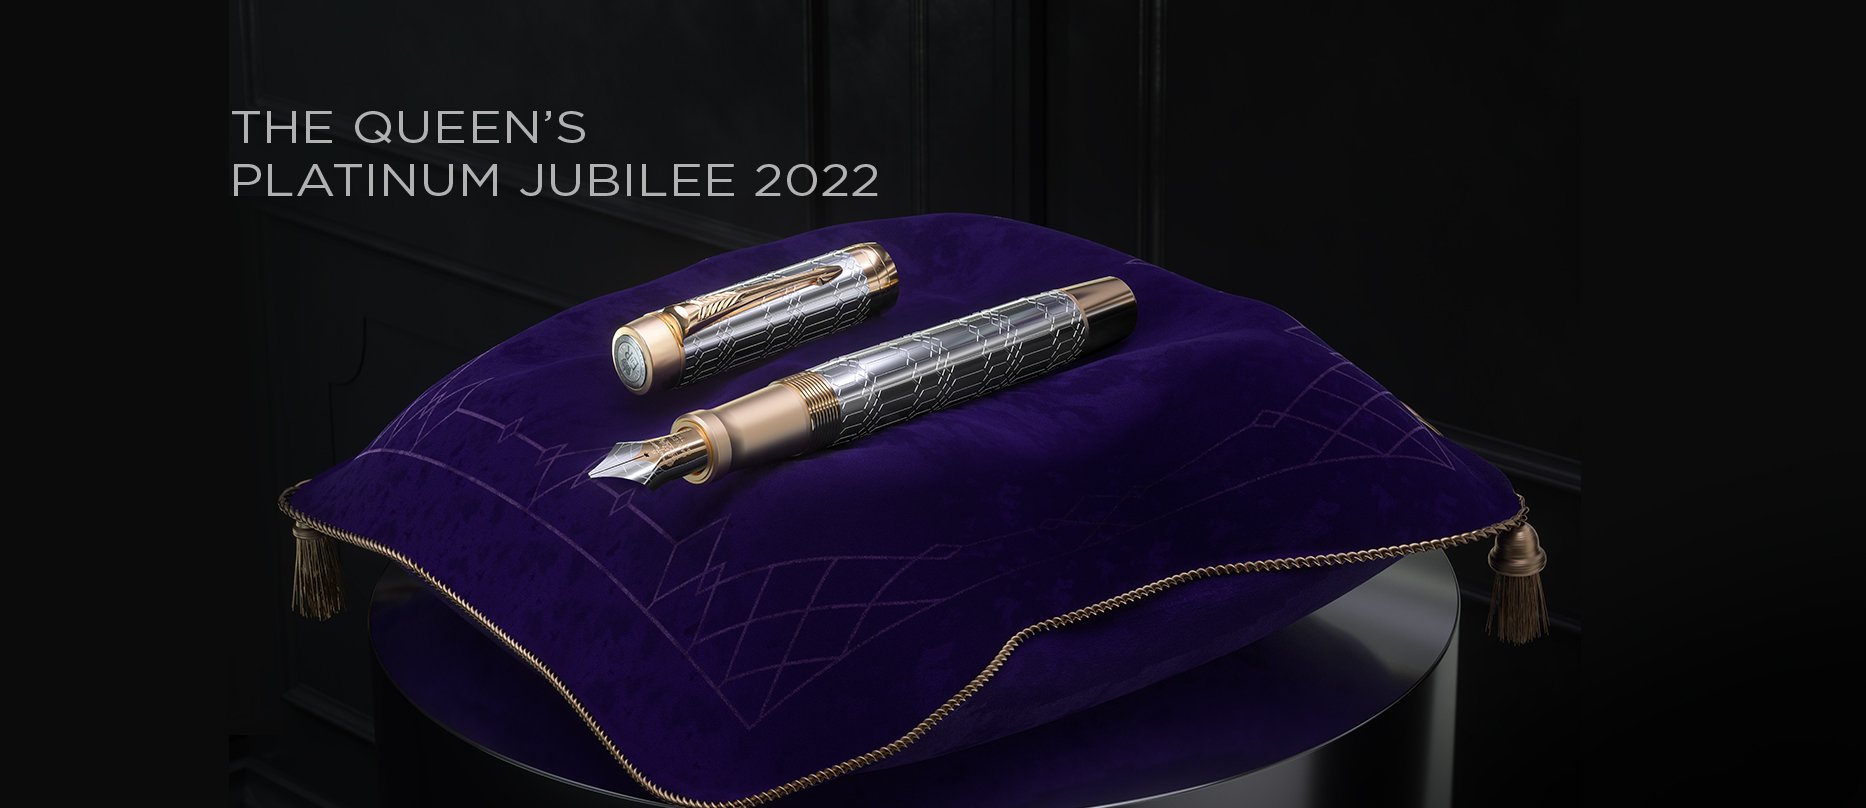 The Queen's Jubilee platinum Jubilee 2022 fountain pen